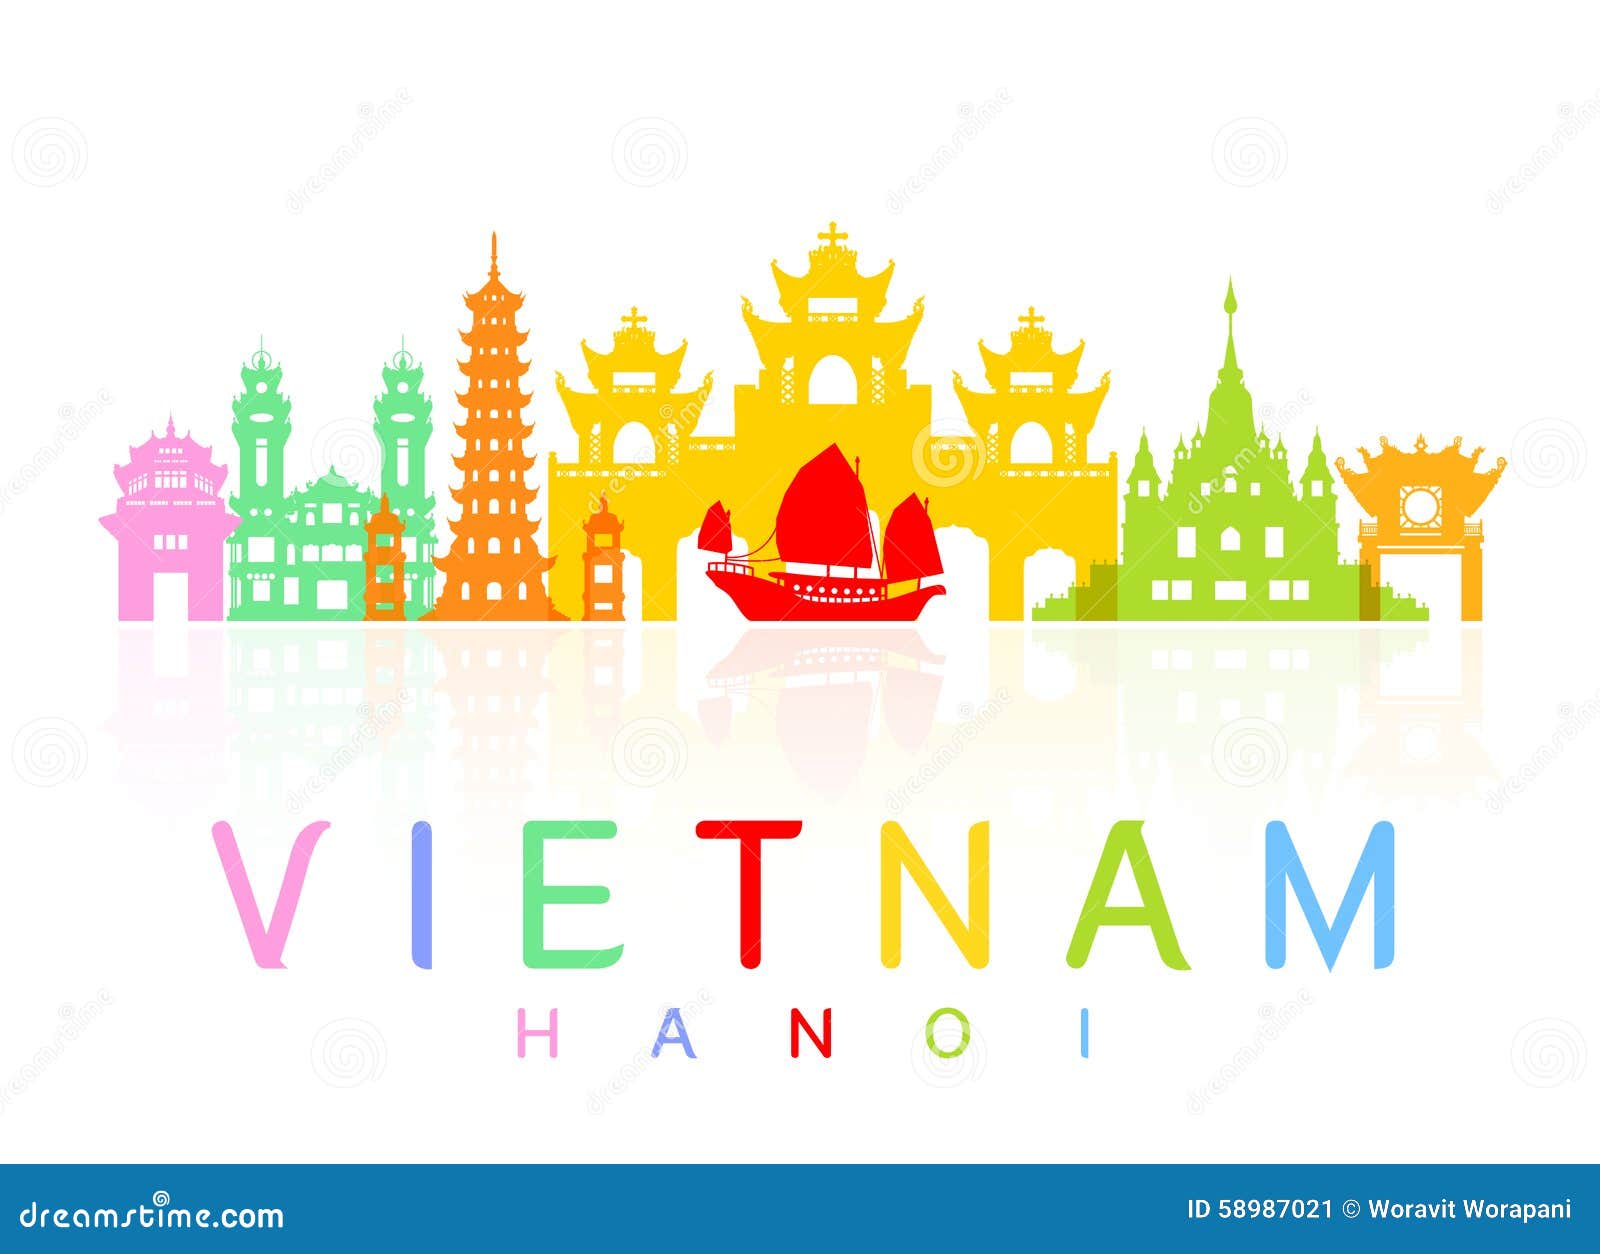 clipart map of vietnam - photo #46